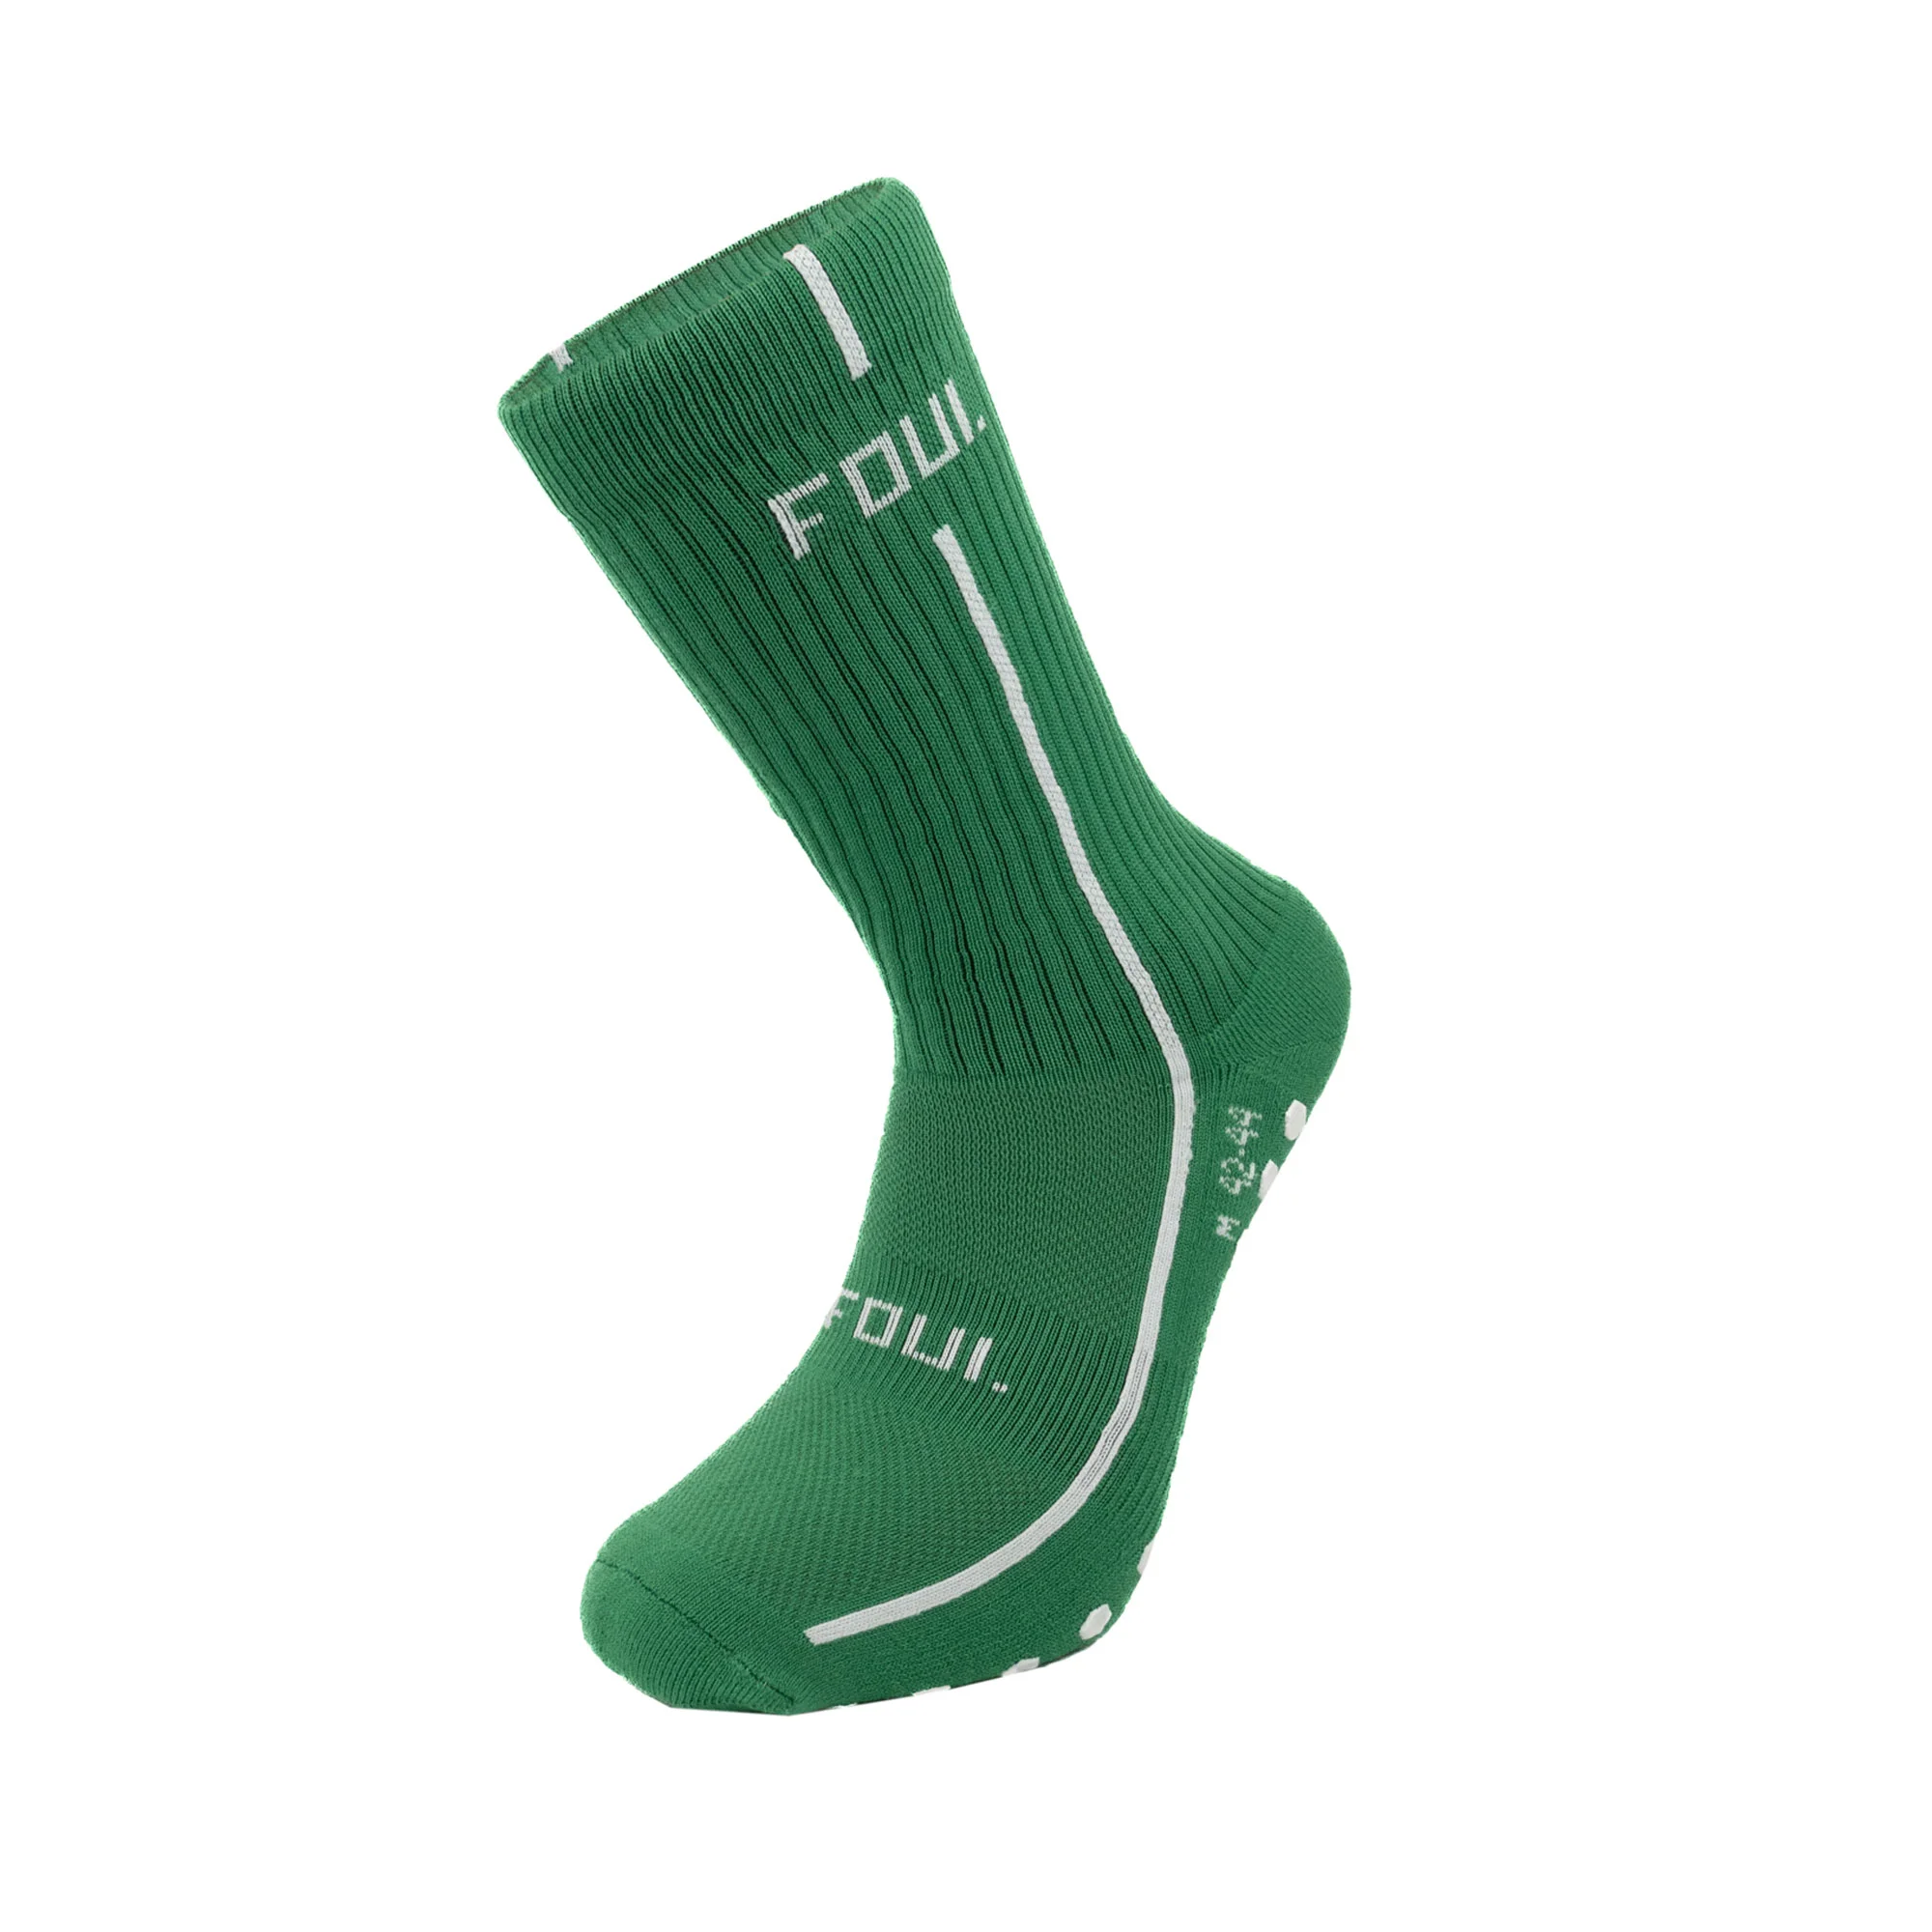 Football grip socks FOUL (2)